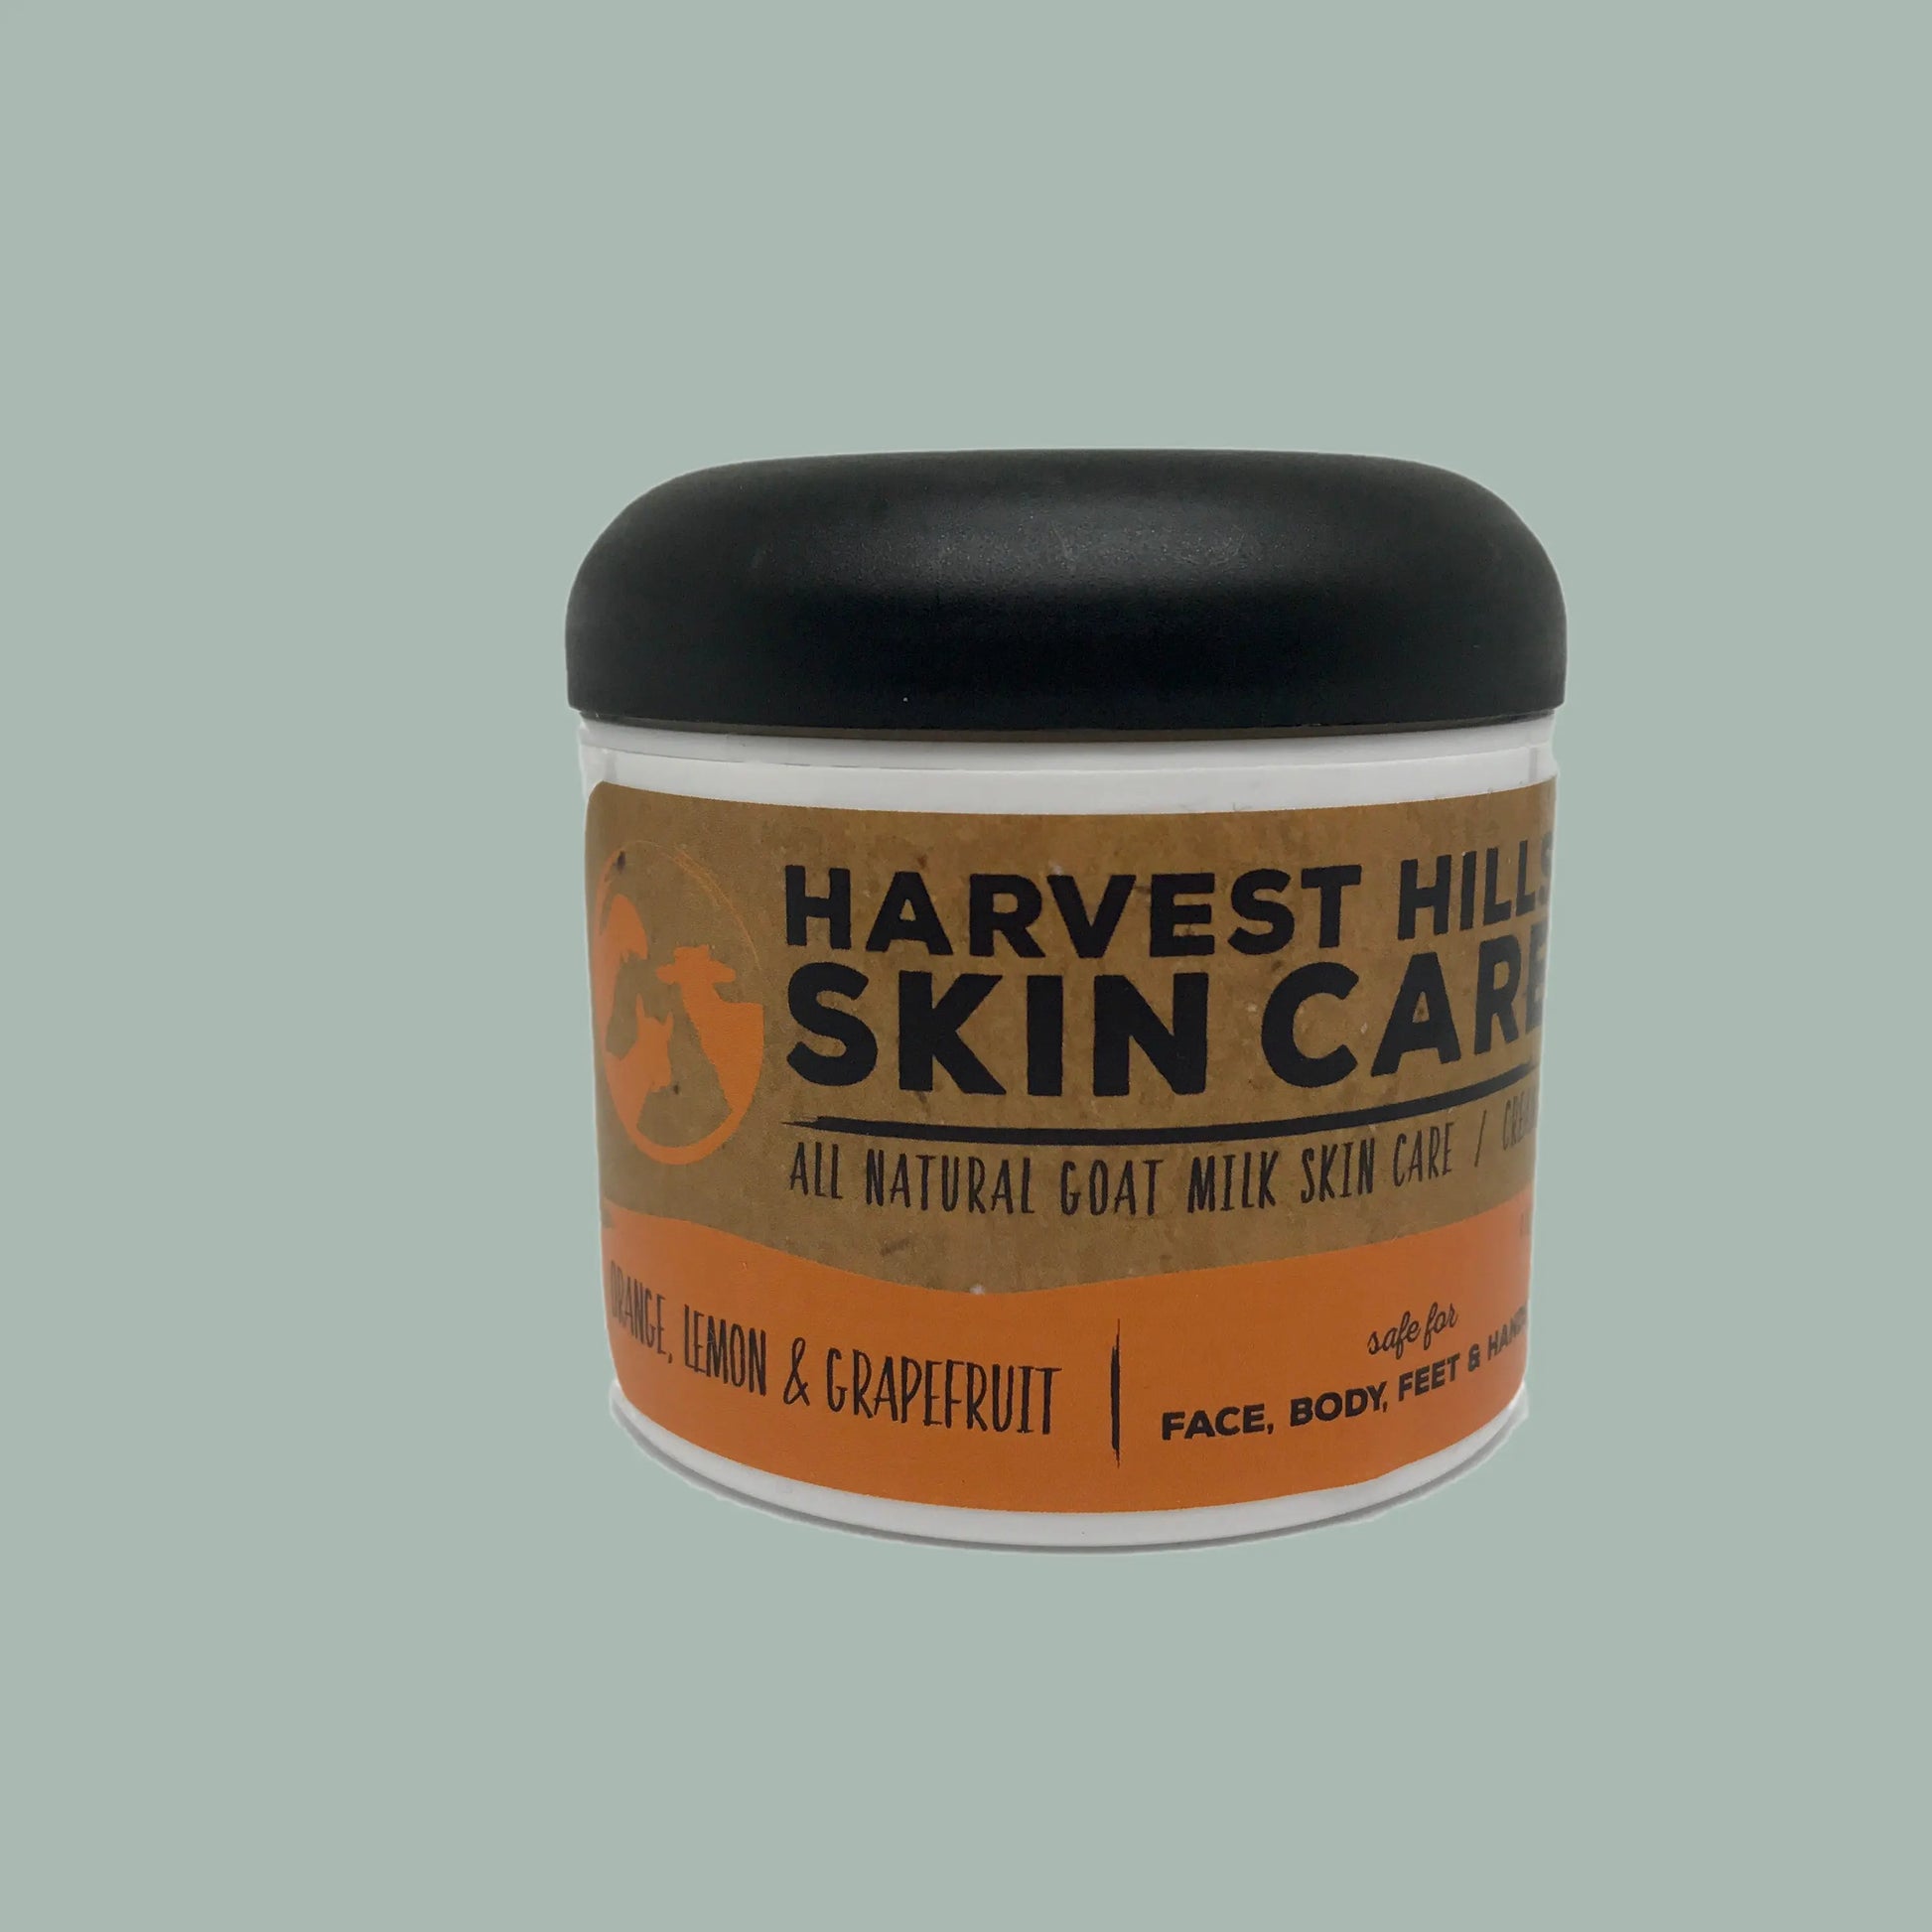 Orange, Lemon & Grapefruit Intense Moisturizer Harvest Hills Skin Care All Natural Goat Milk Skin Care